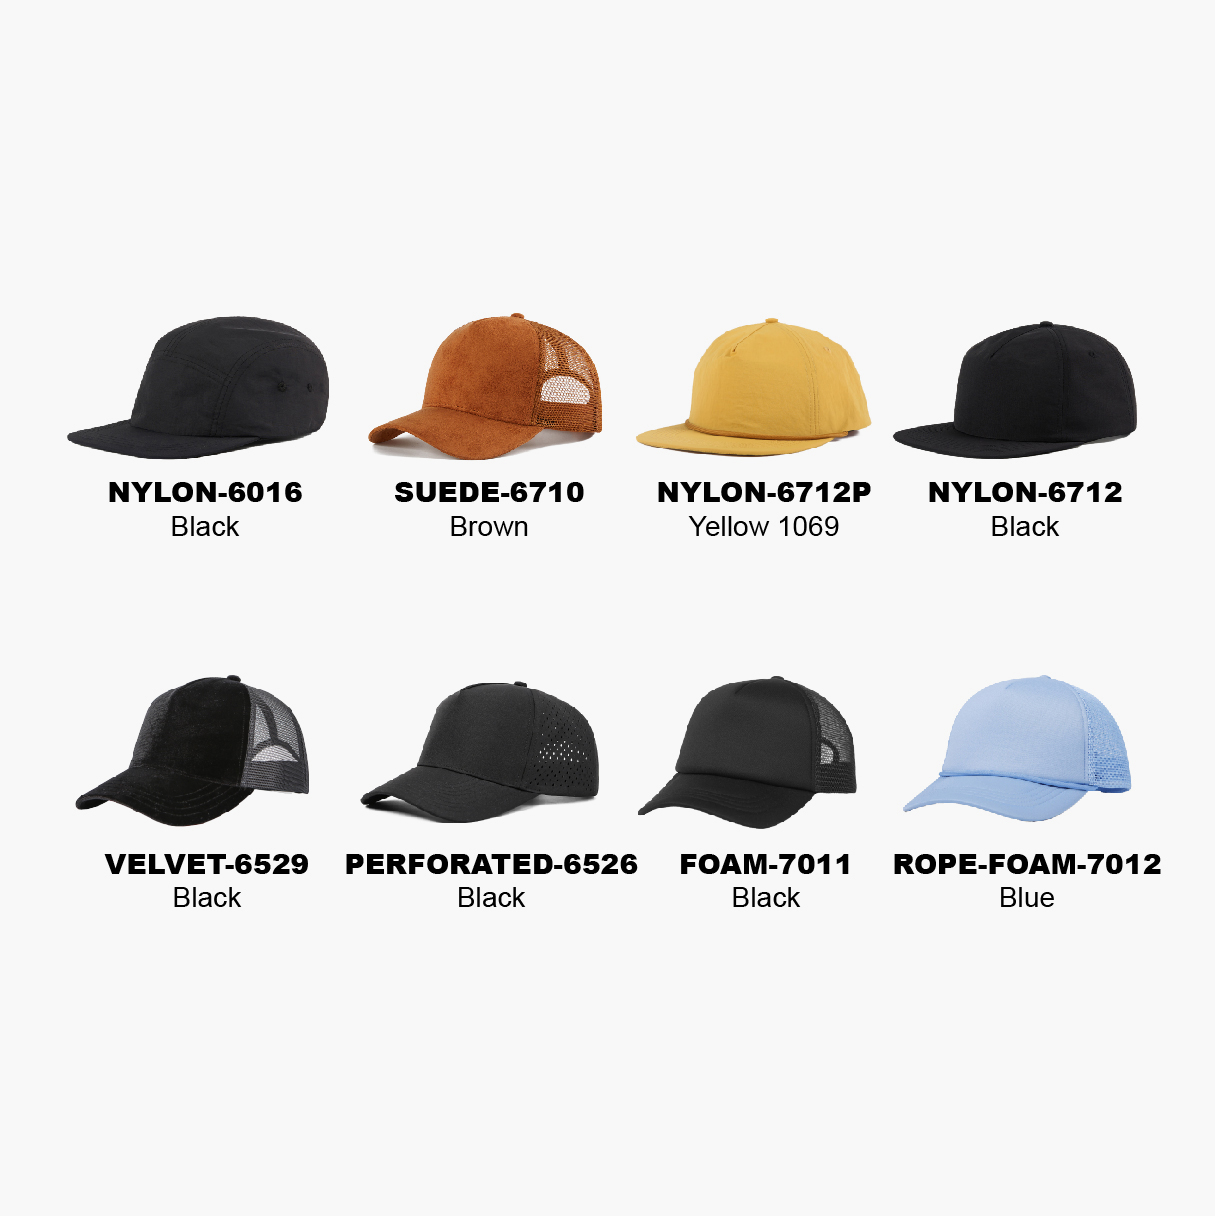 Sample Packs - Blank Hat